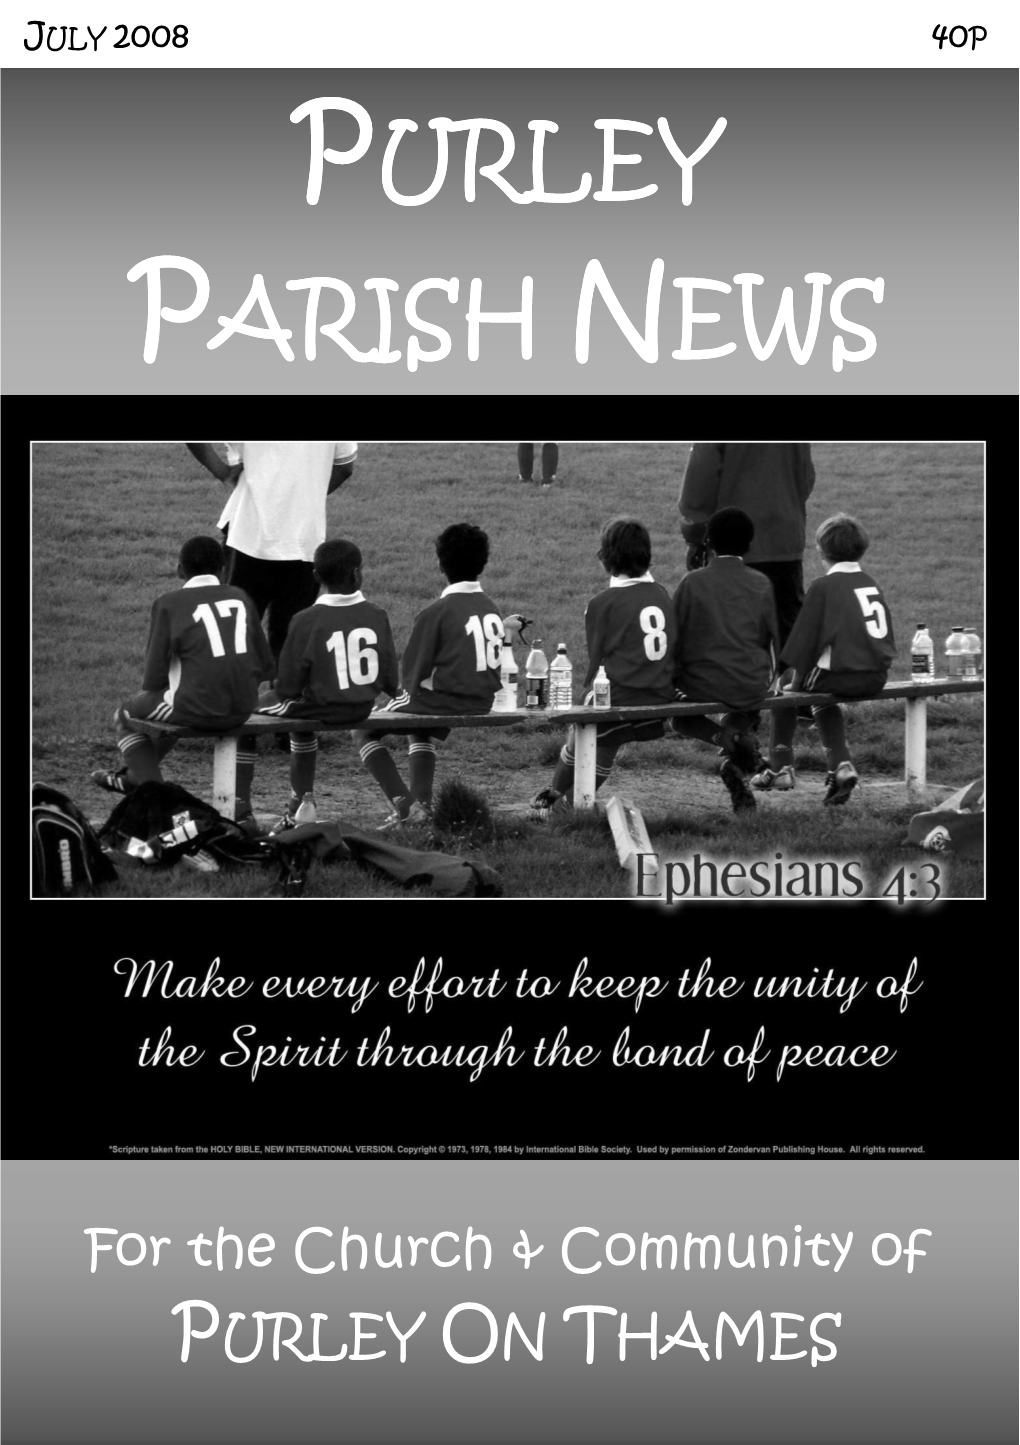 Purley Parish News